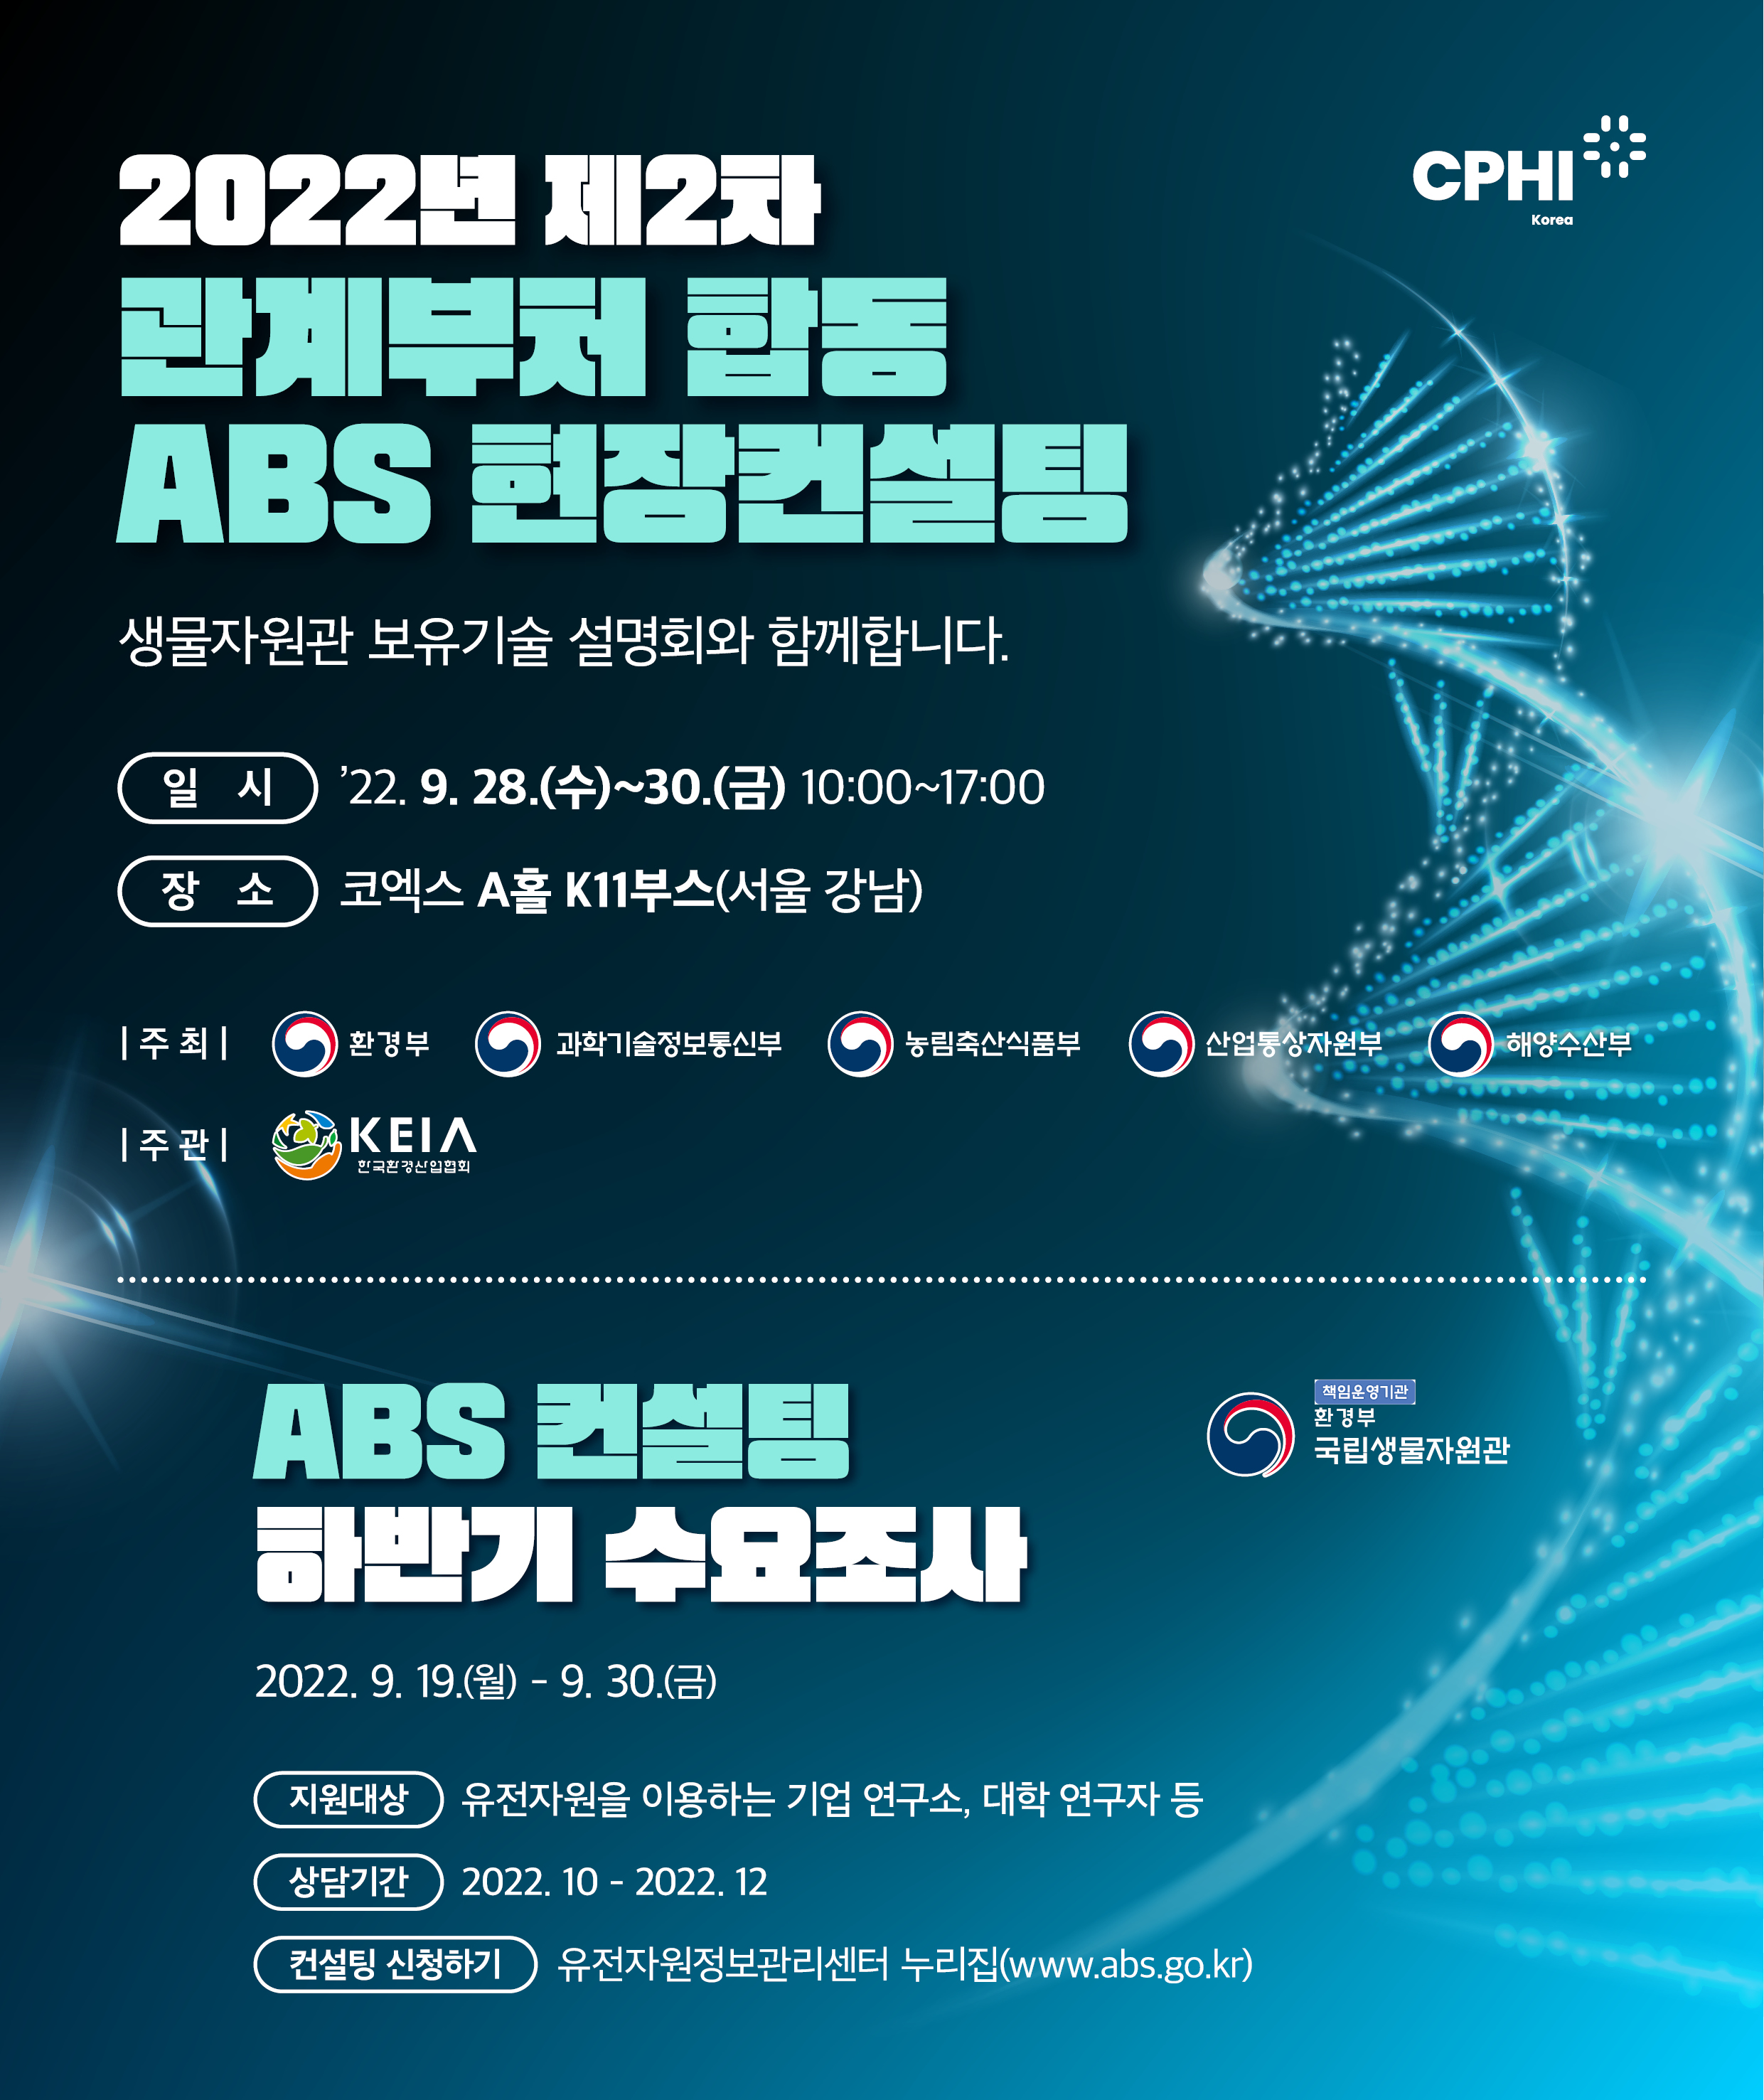 cphi korea ABS 현장컨설팅&수요조사_웹배너.jpg 대표 게시물 이미지 입니다.